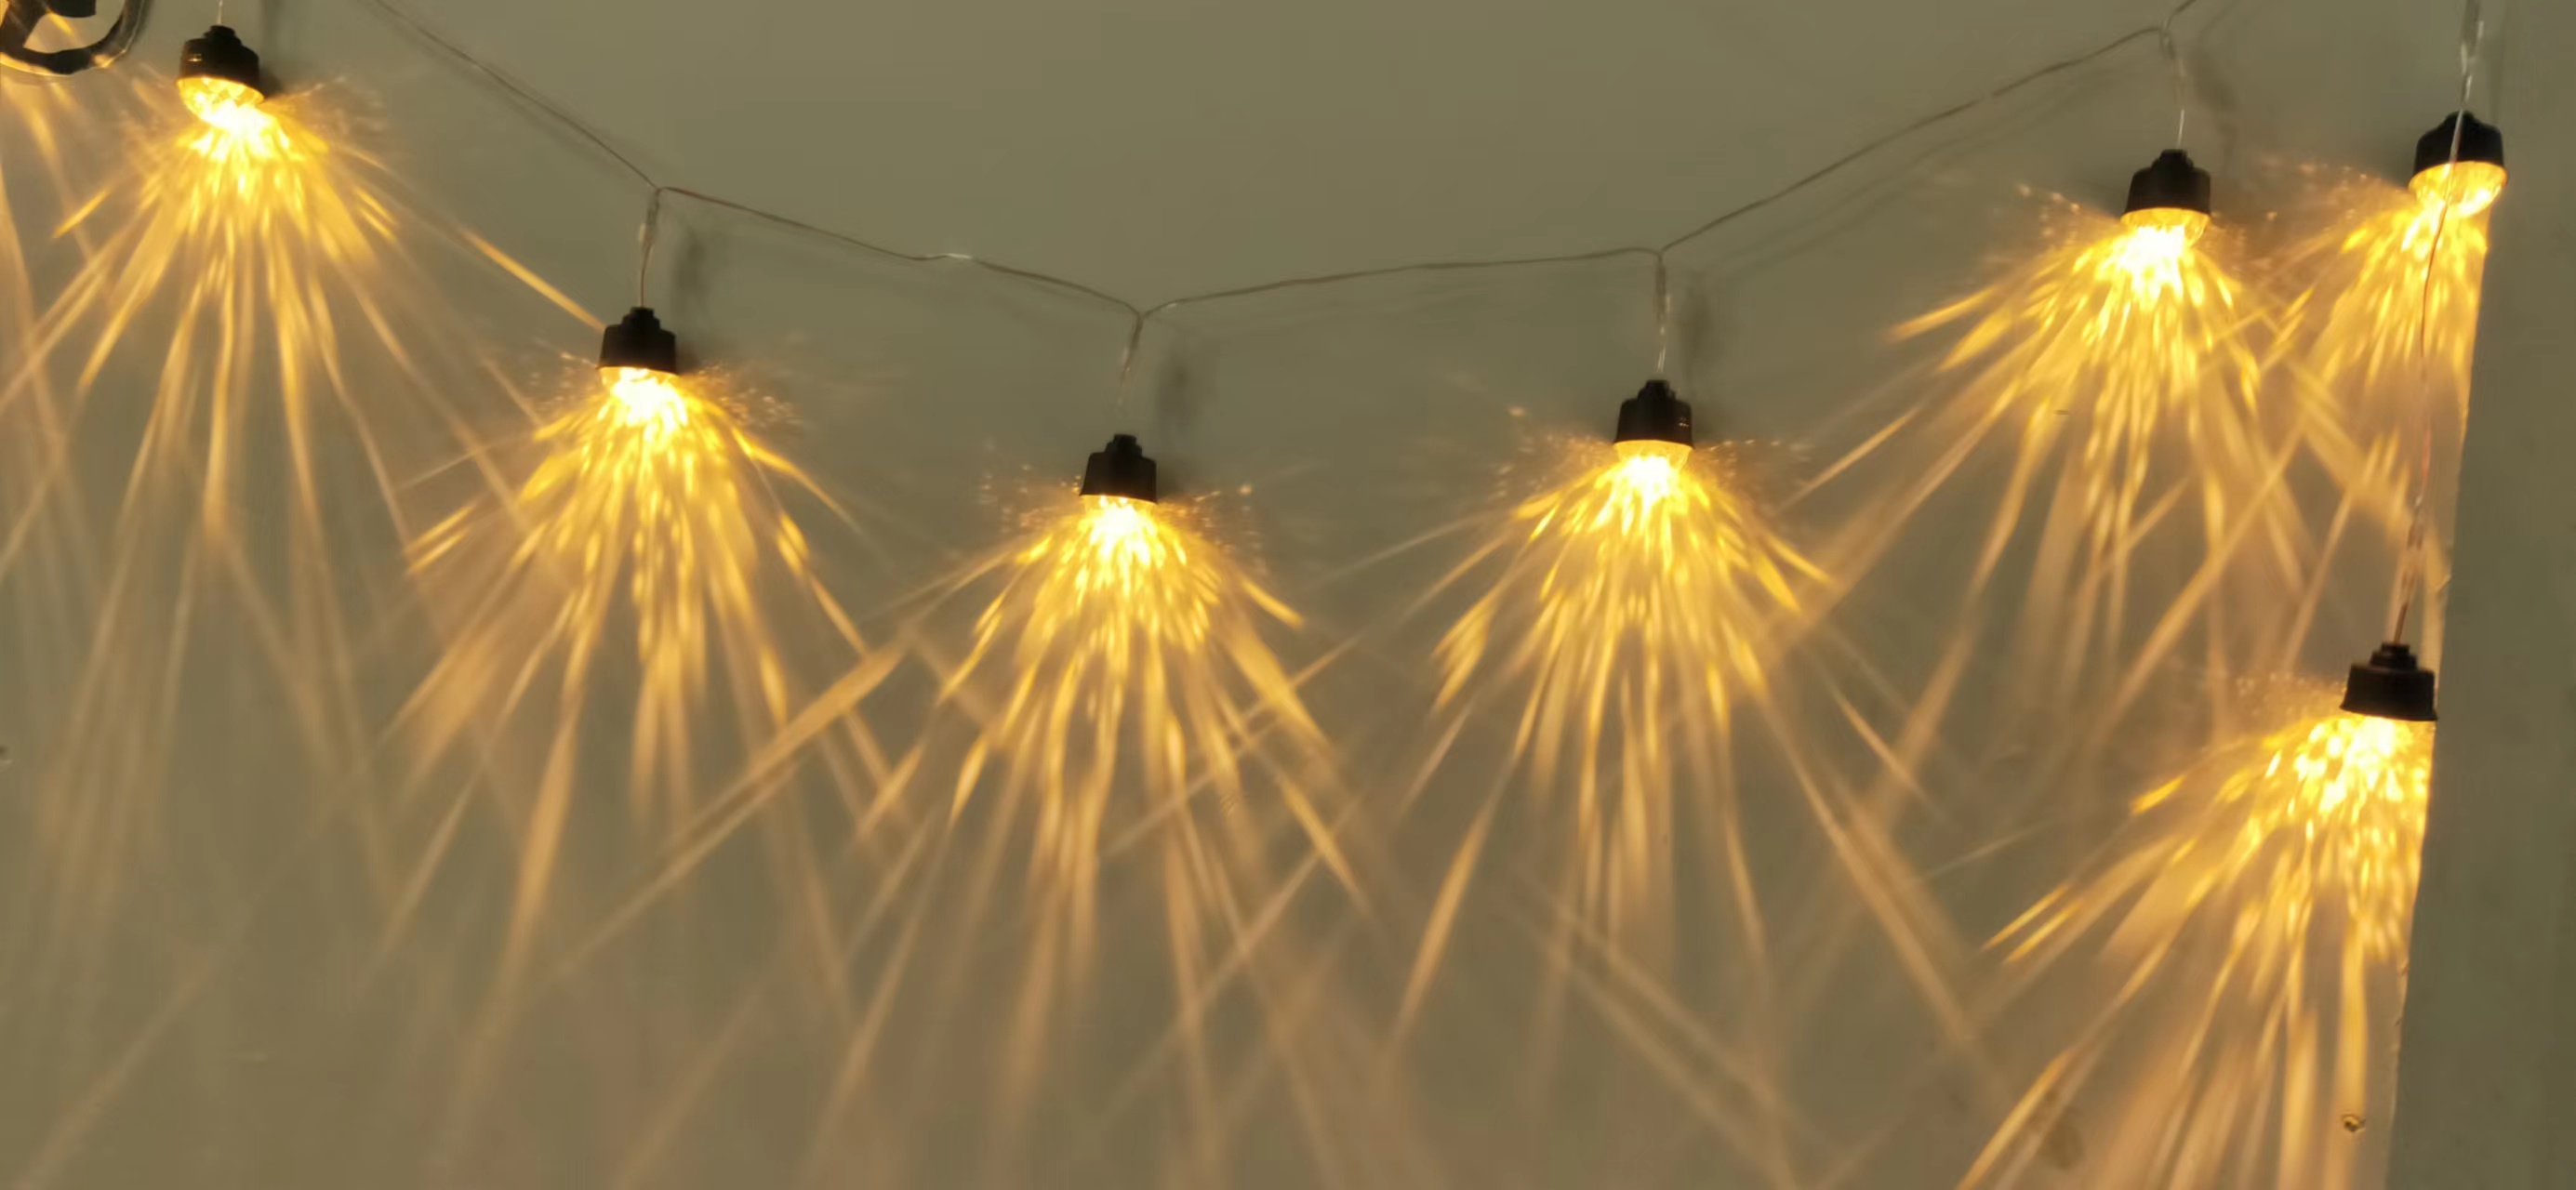 Indoor and outdoor atmosphere waterproof shower-like luminous string lights